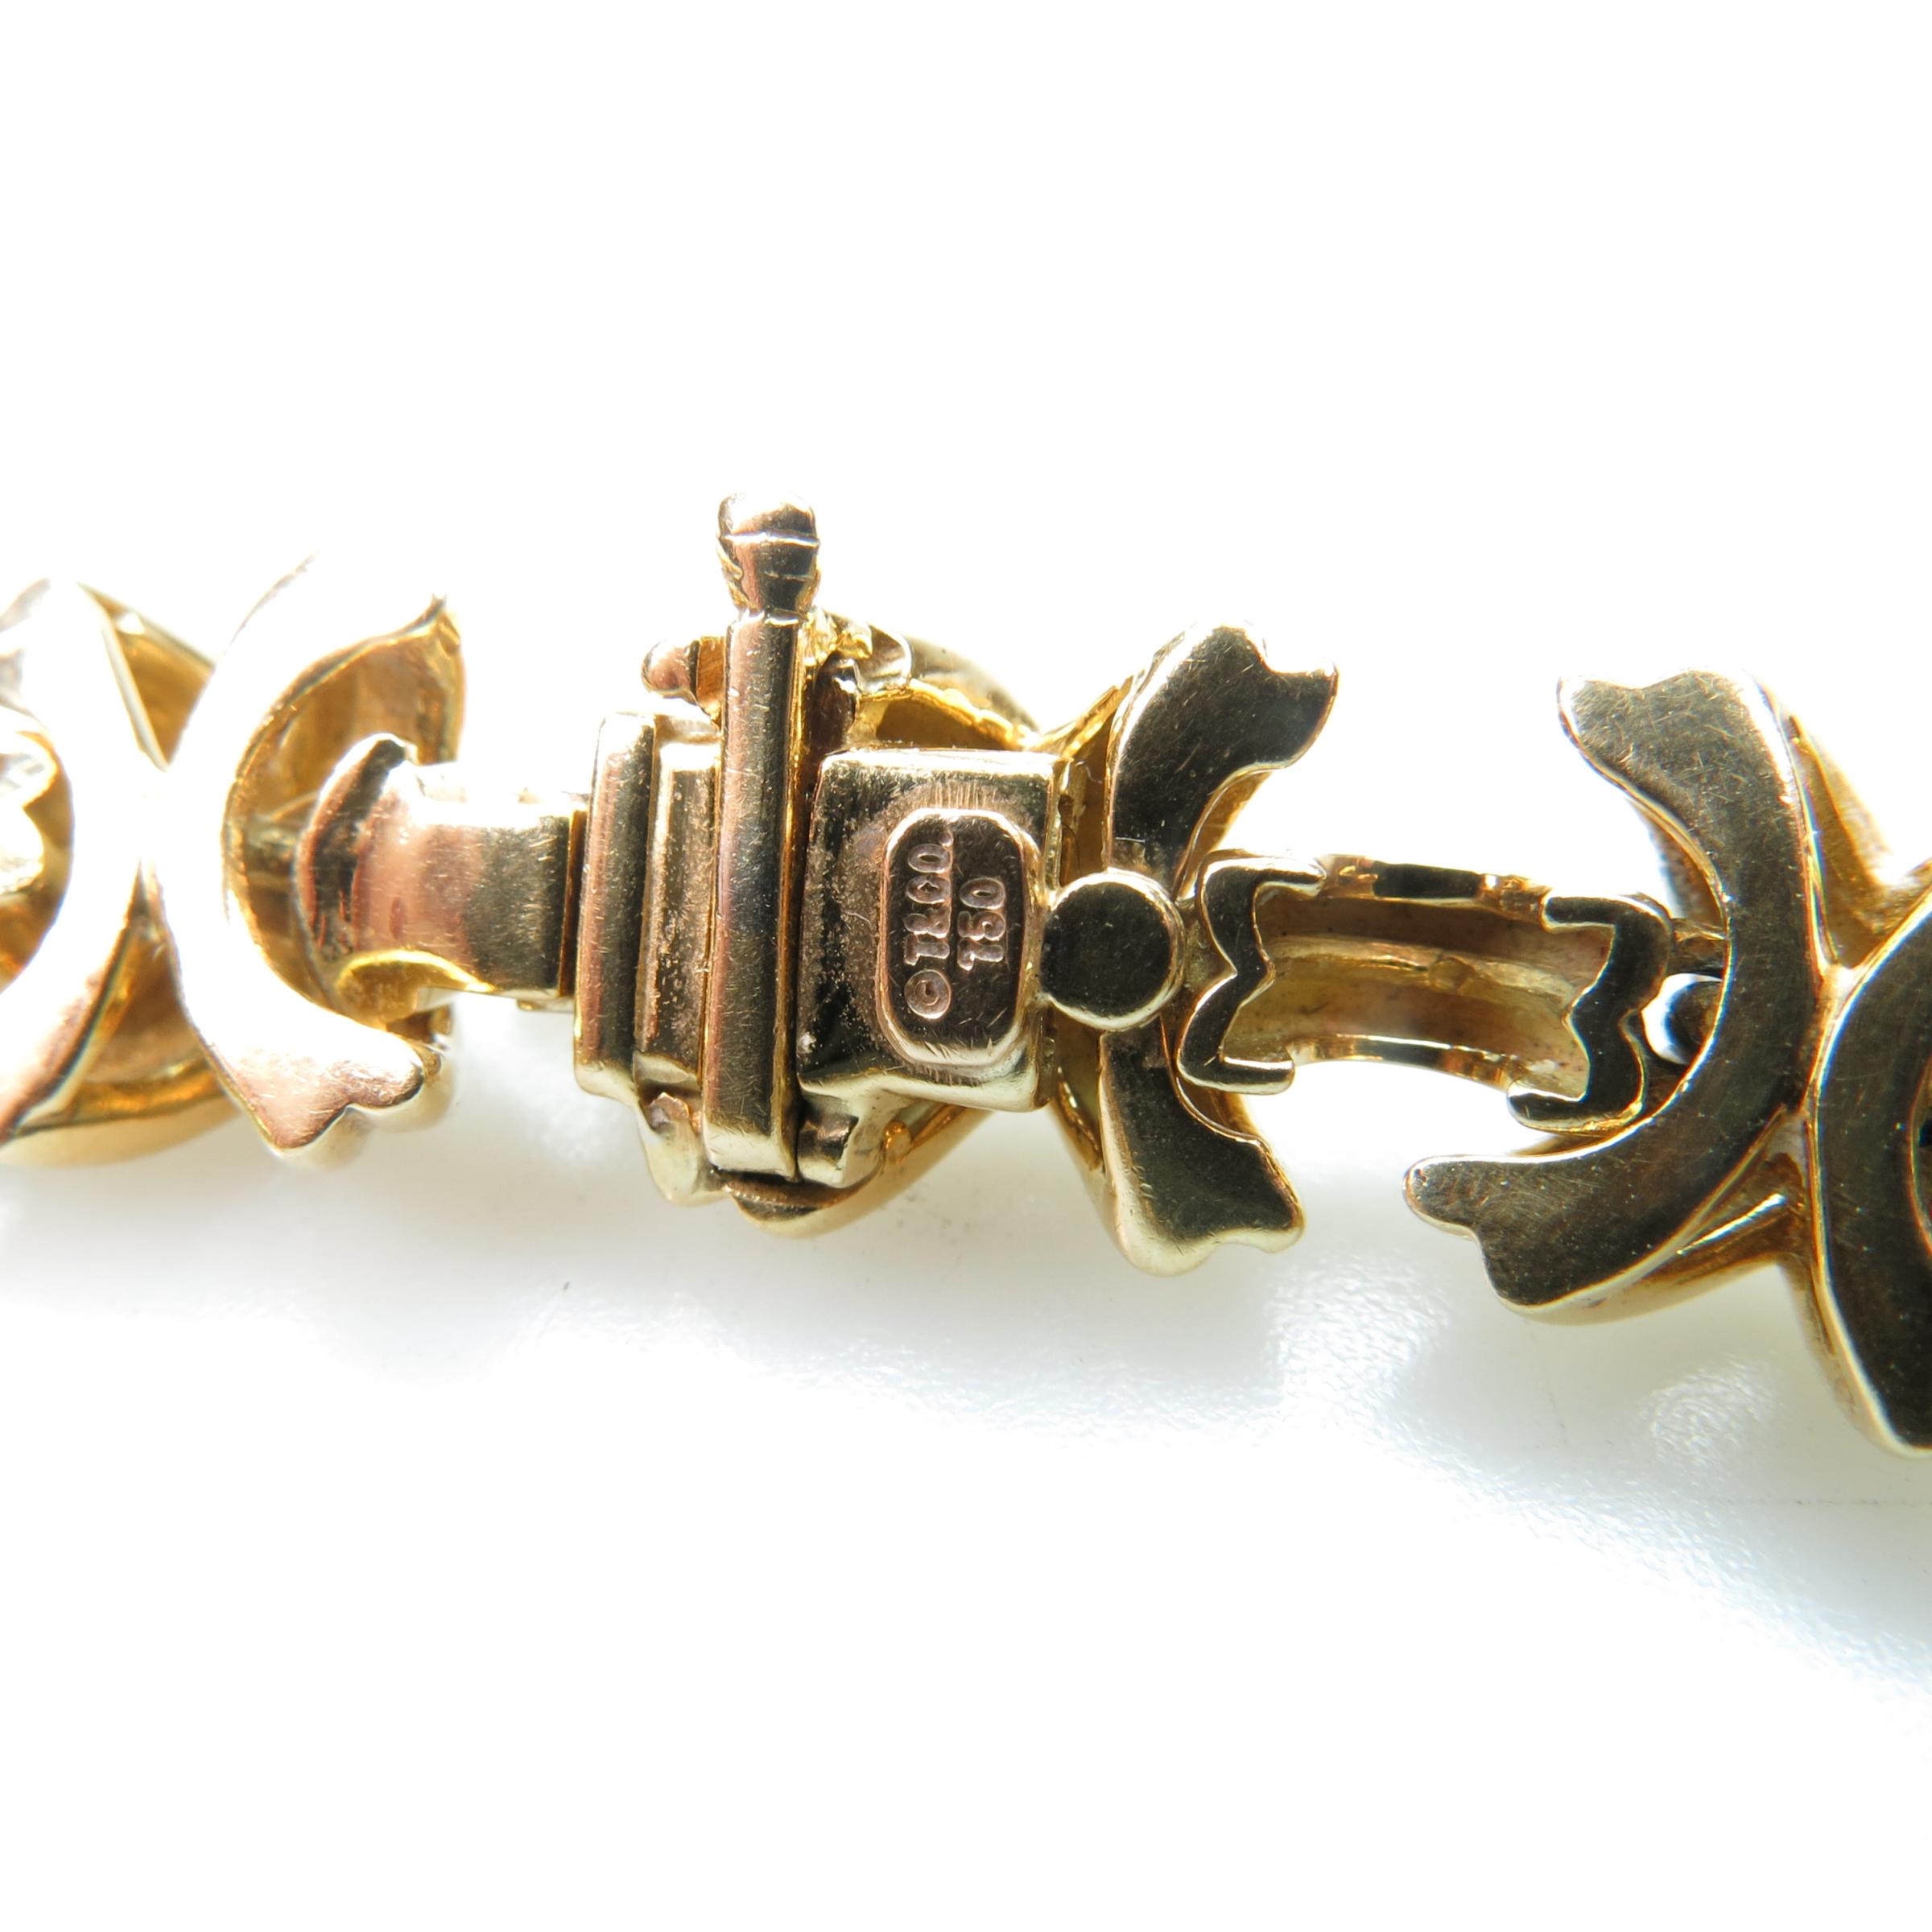 Tiffany & Co. 18k Yellow Gold Bracelet